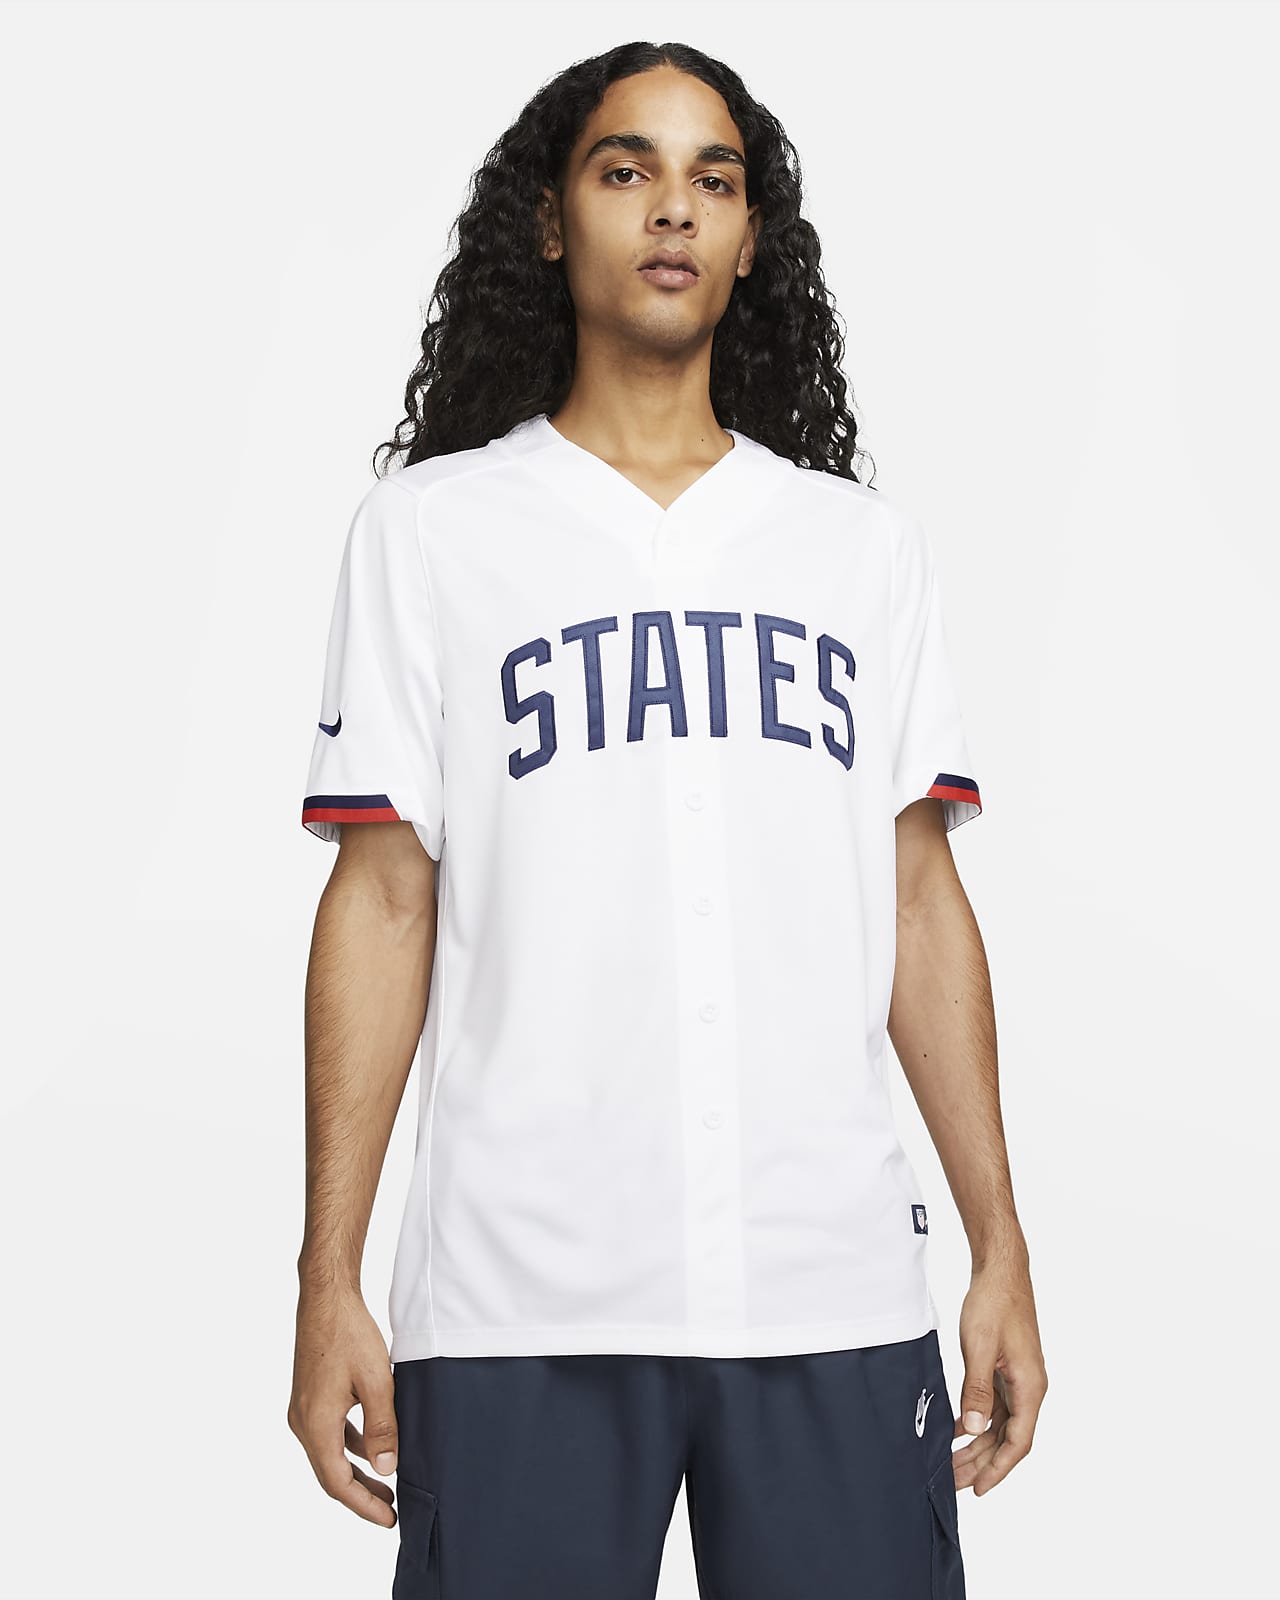 U.S. Men's Nike Dri-FIT Baseball Jersey